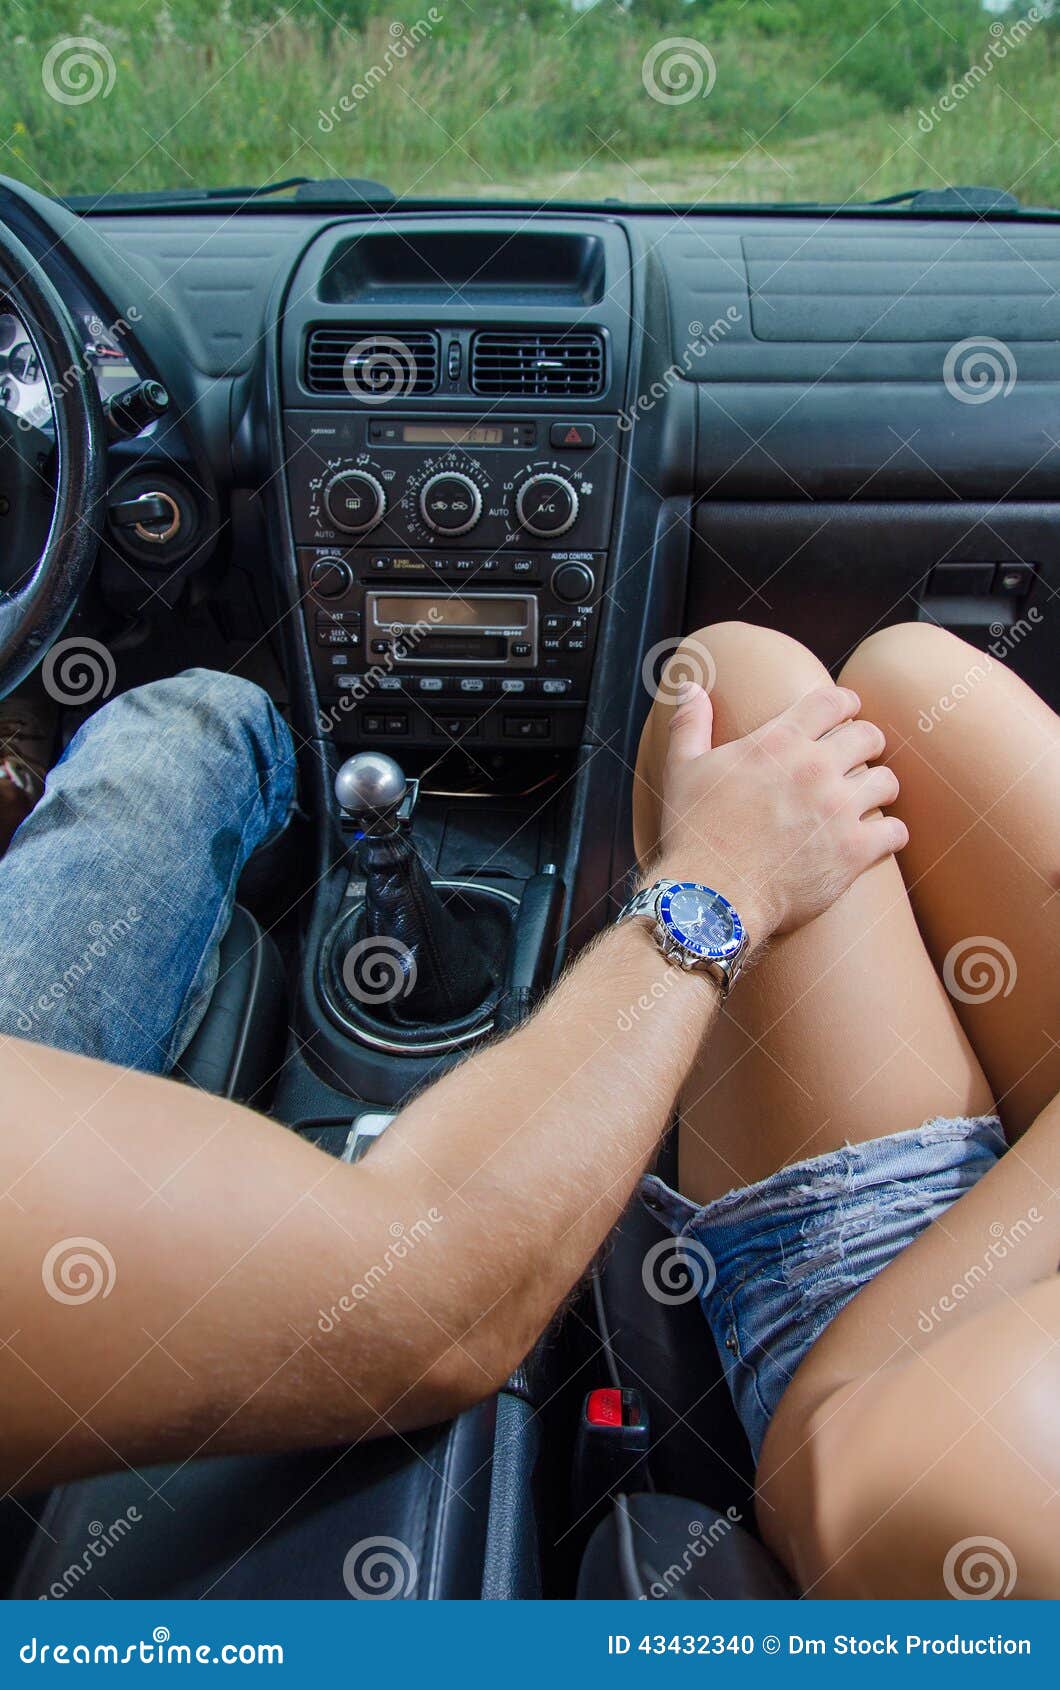 https://thumbs.dreamstime.com/z/male-hand-touches-female-knee-car-43432340.jpg